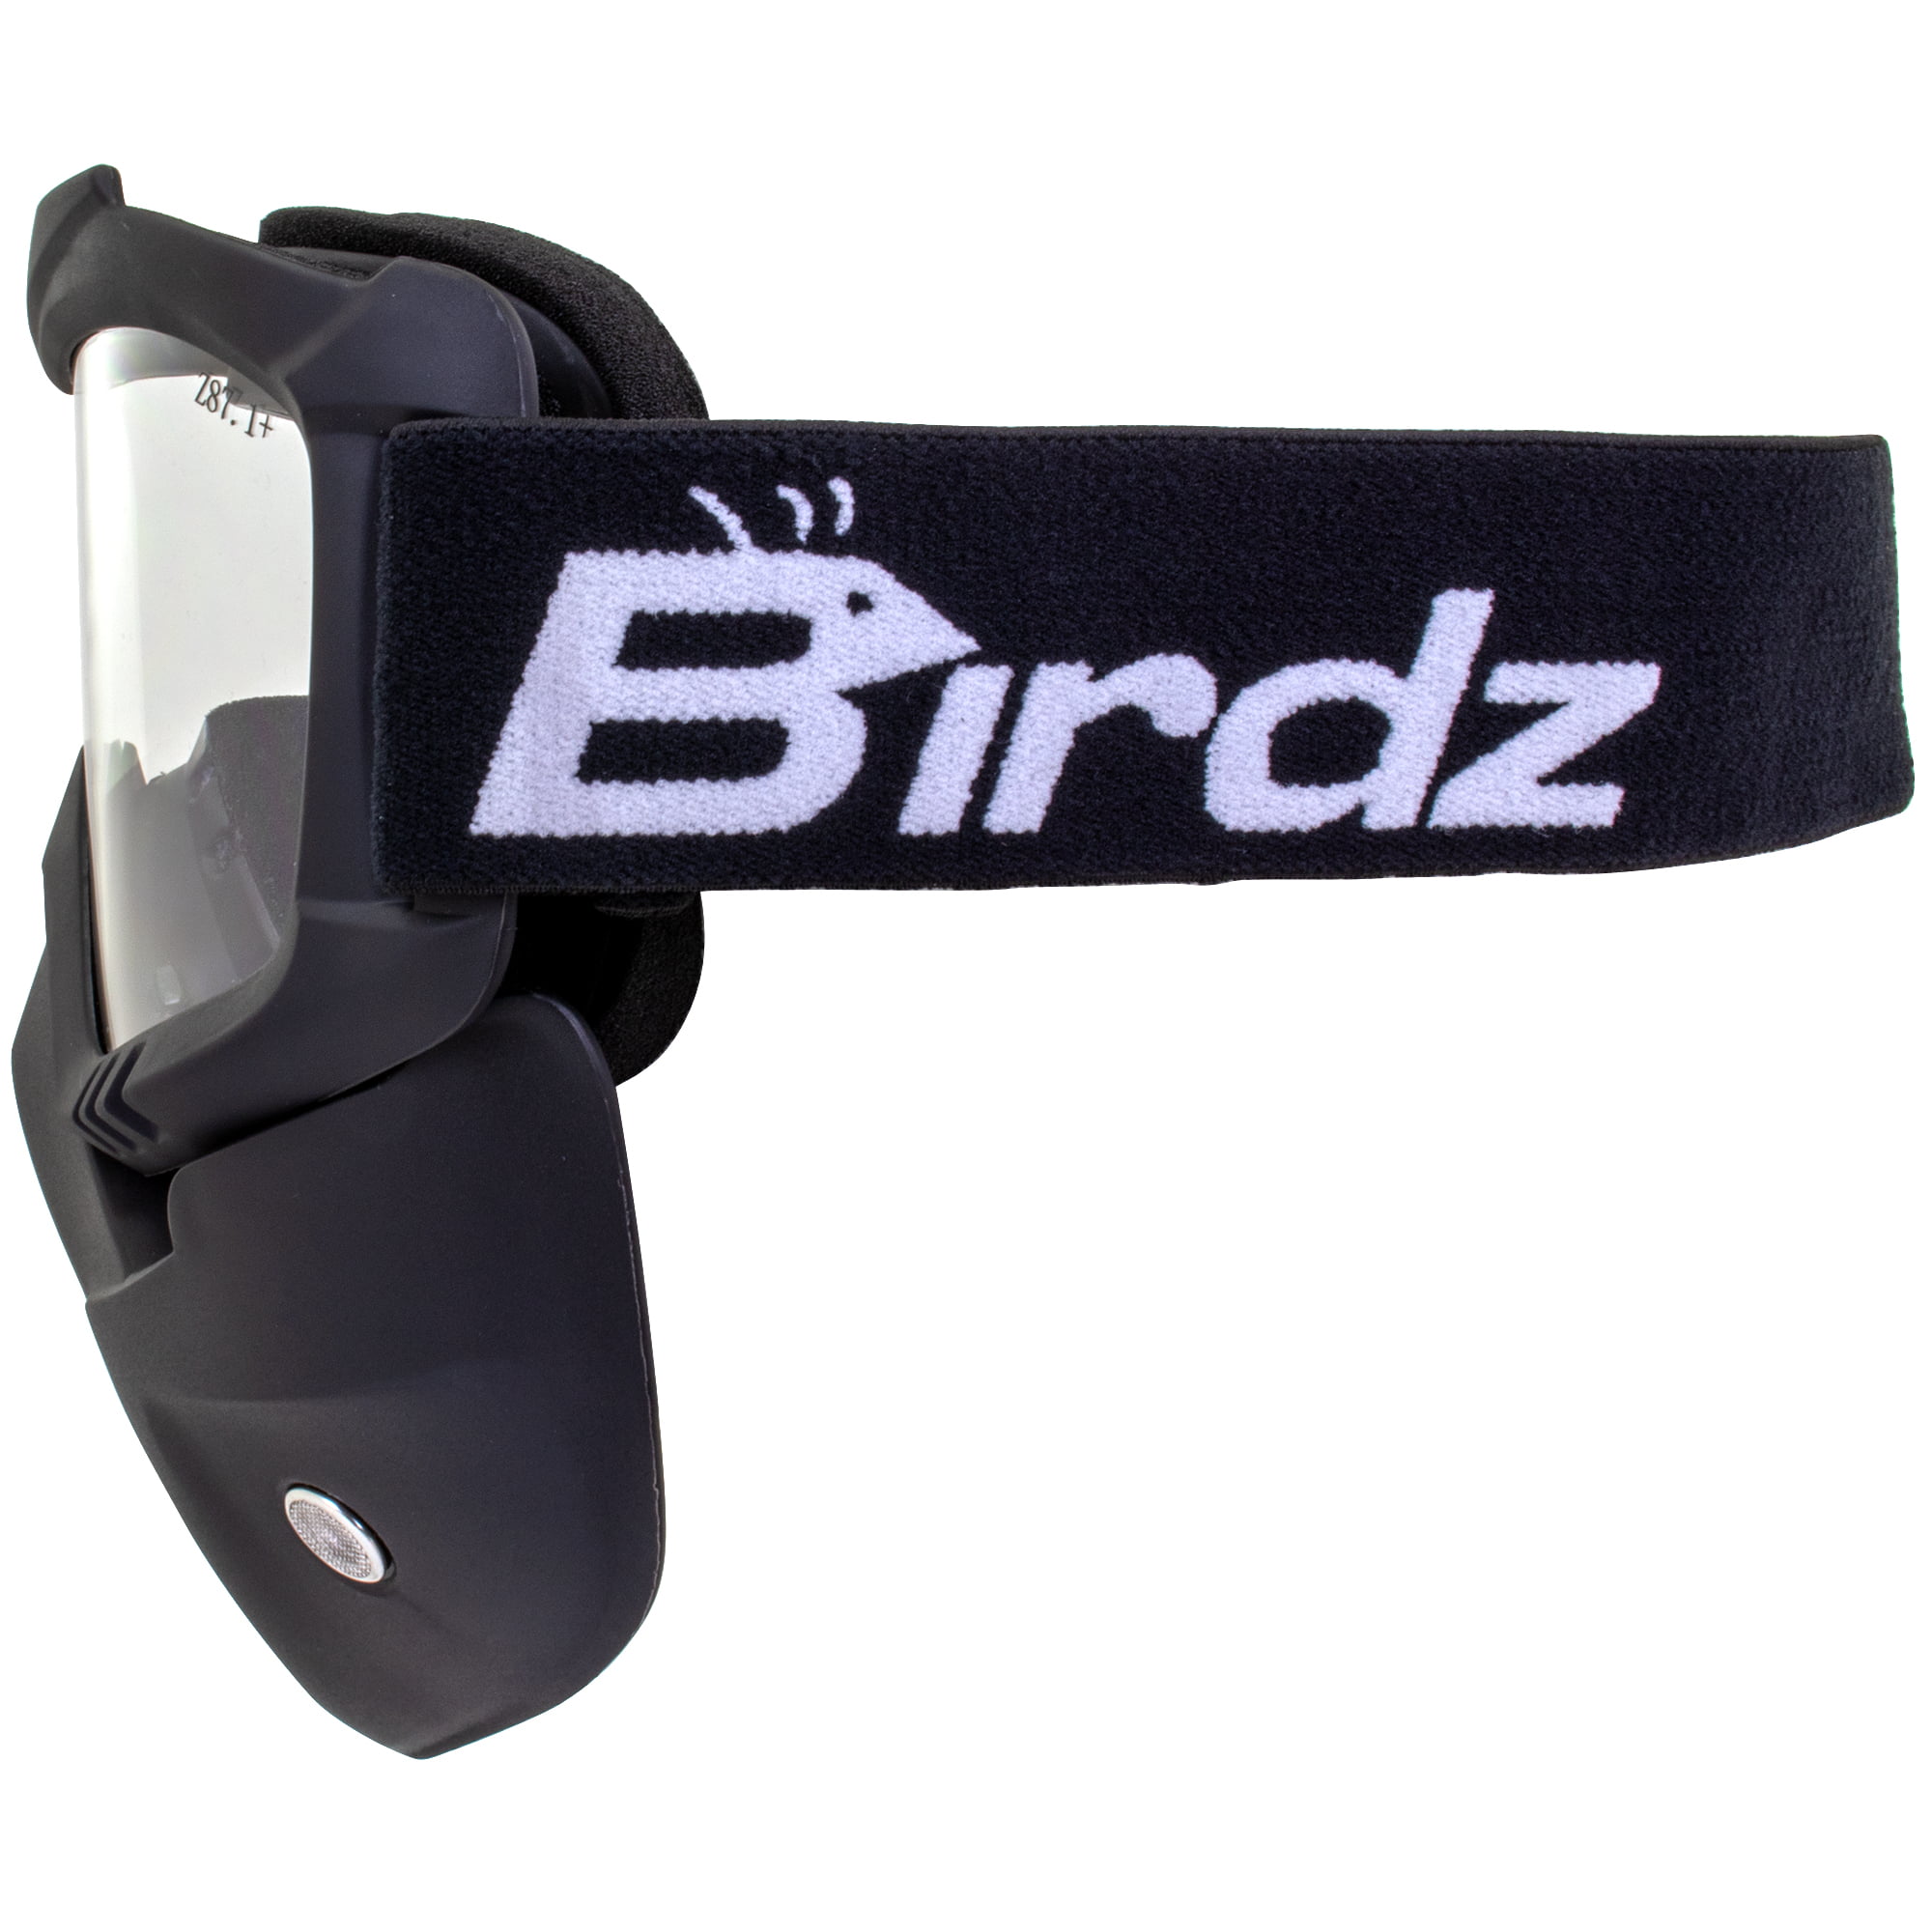 Birdz Eyewear Skylark Motorcycle Goggles Removable Face Mask Black Frames Clear Lens